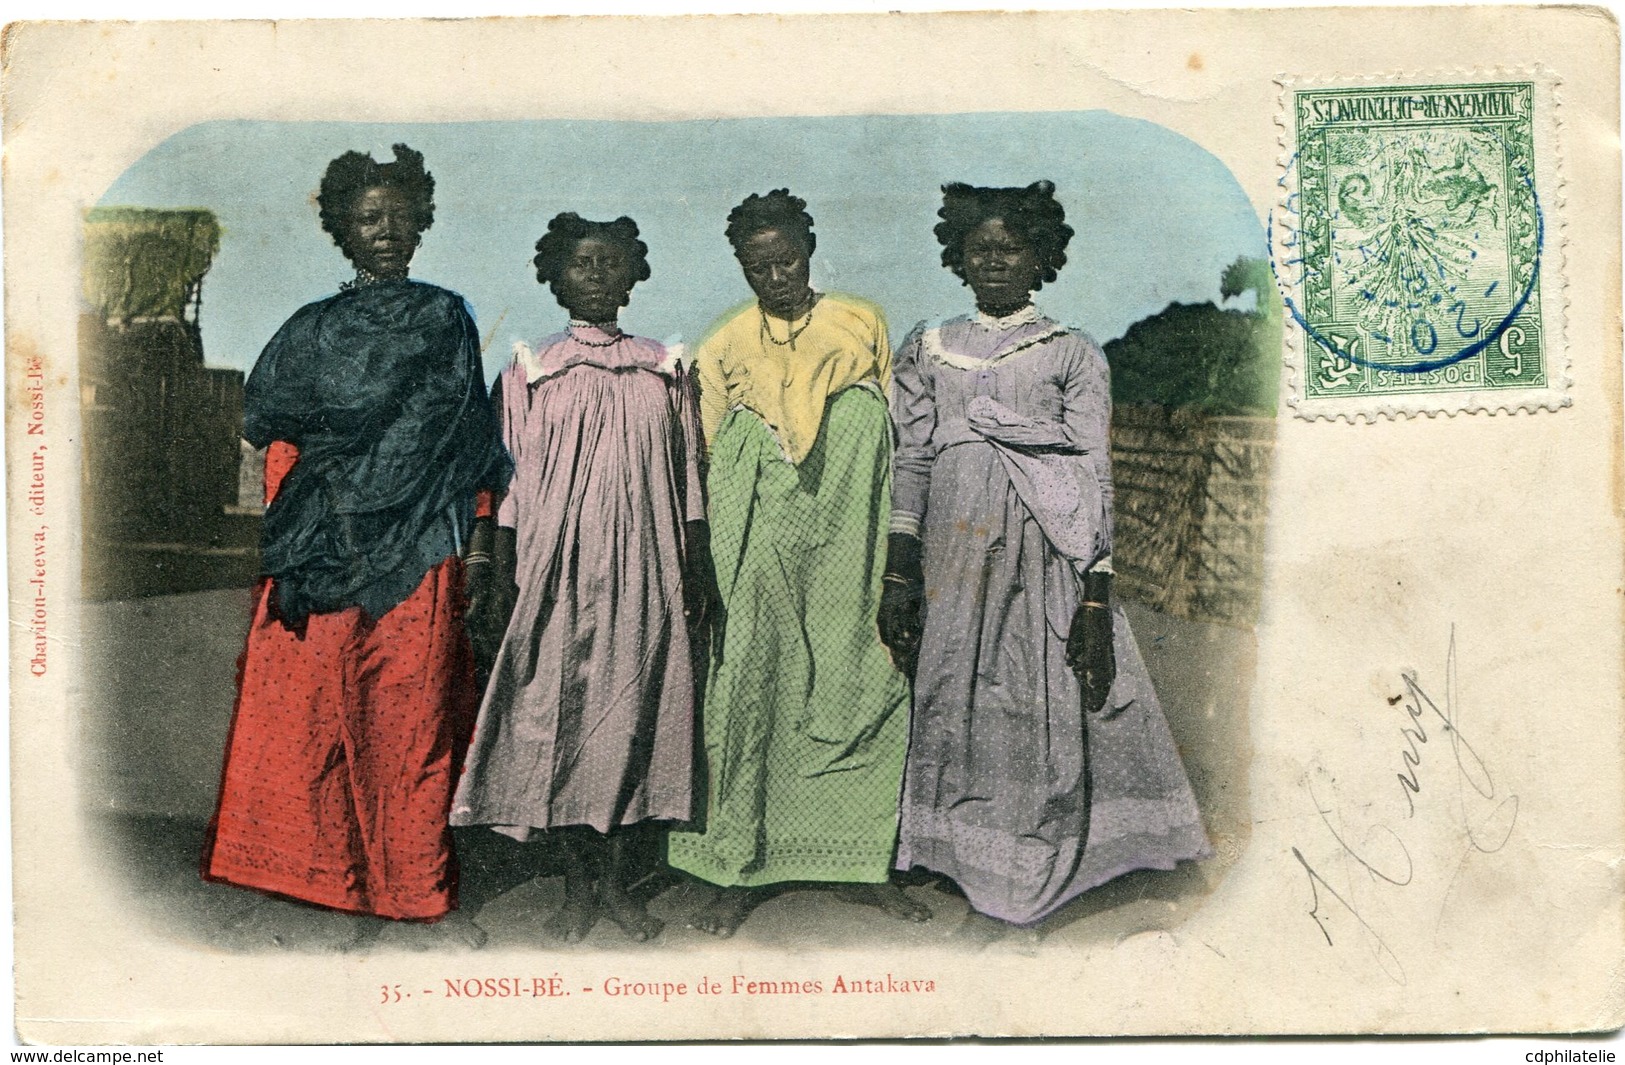 MADAGASCAR CARTE POSTALE DE NOSSI-BE GROUPE DE FEMMES ANTAKAVA DEPART -20- 18 JUIN 06 MADAGASCAR POUR LE TONKIN - Briefe U. Dokumente